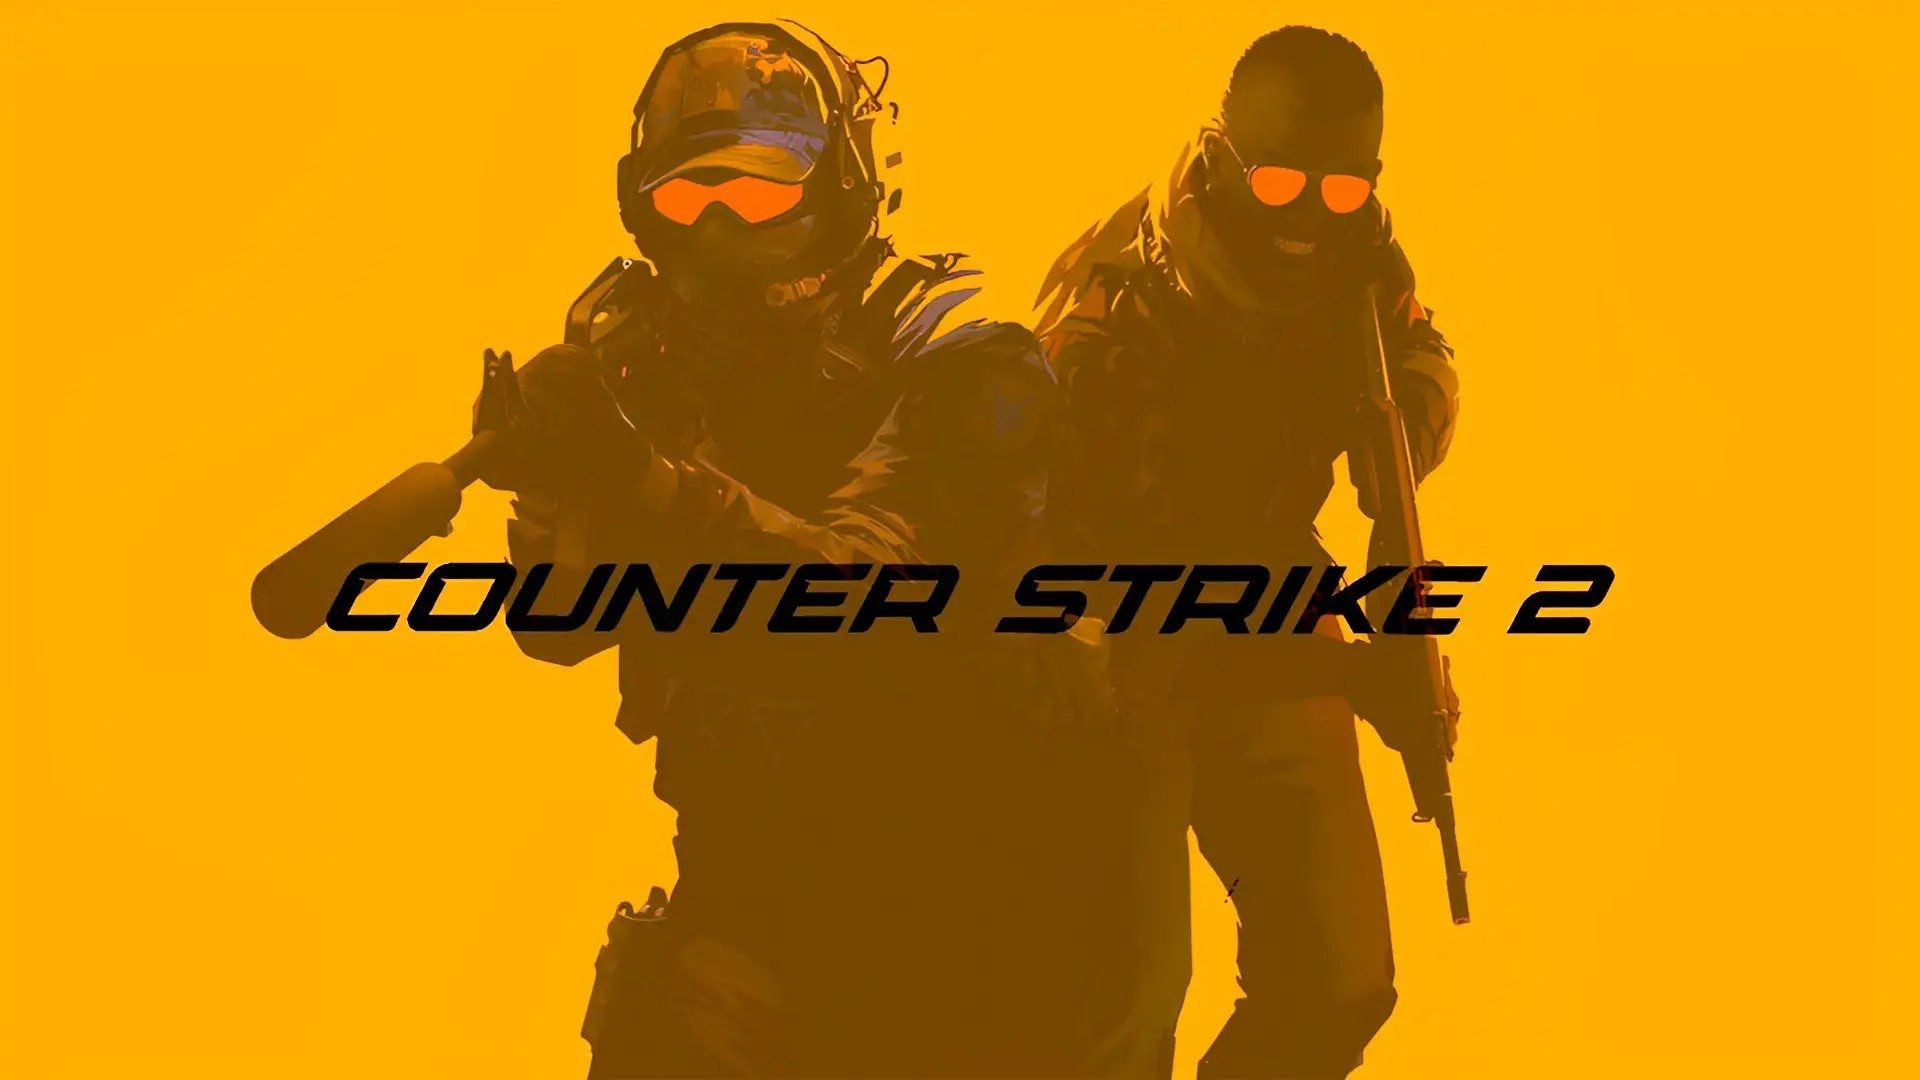 Counter strike 2 game. Counter Strike Global Offensive логотип. Контр страйк 2 логотип. Контр страйк 2023. КС го 2 логотип.